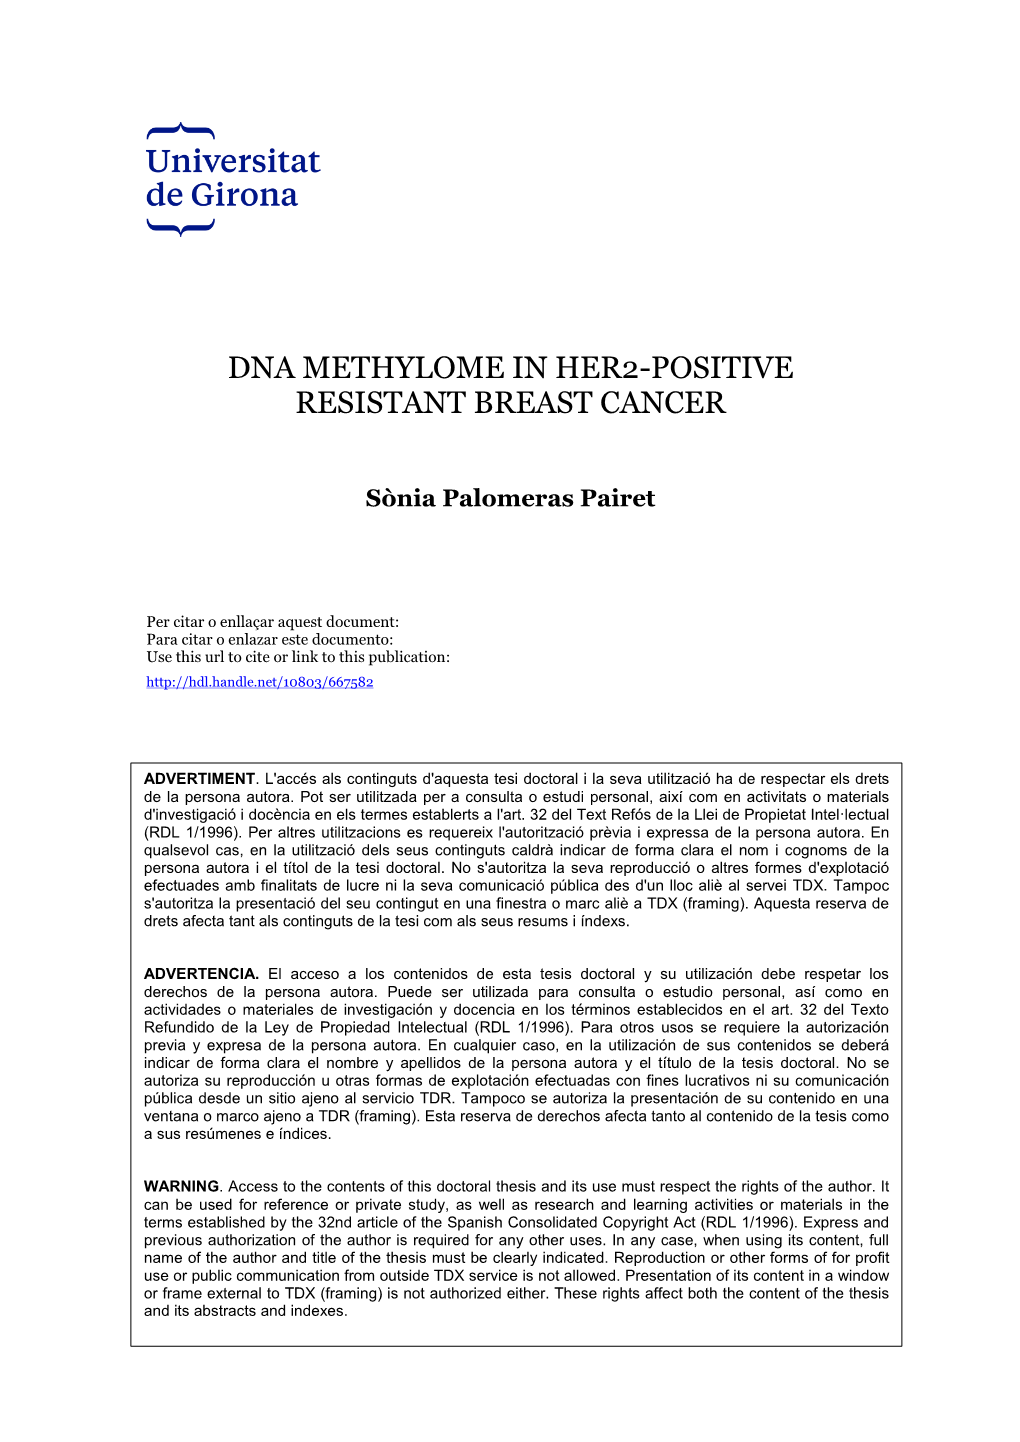 Dna Methylome in Her2-Positive Resistant Breast Cancer